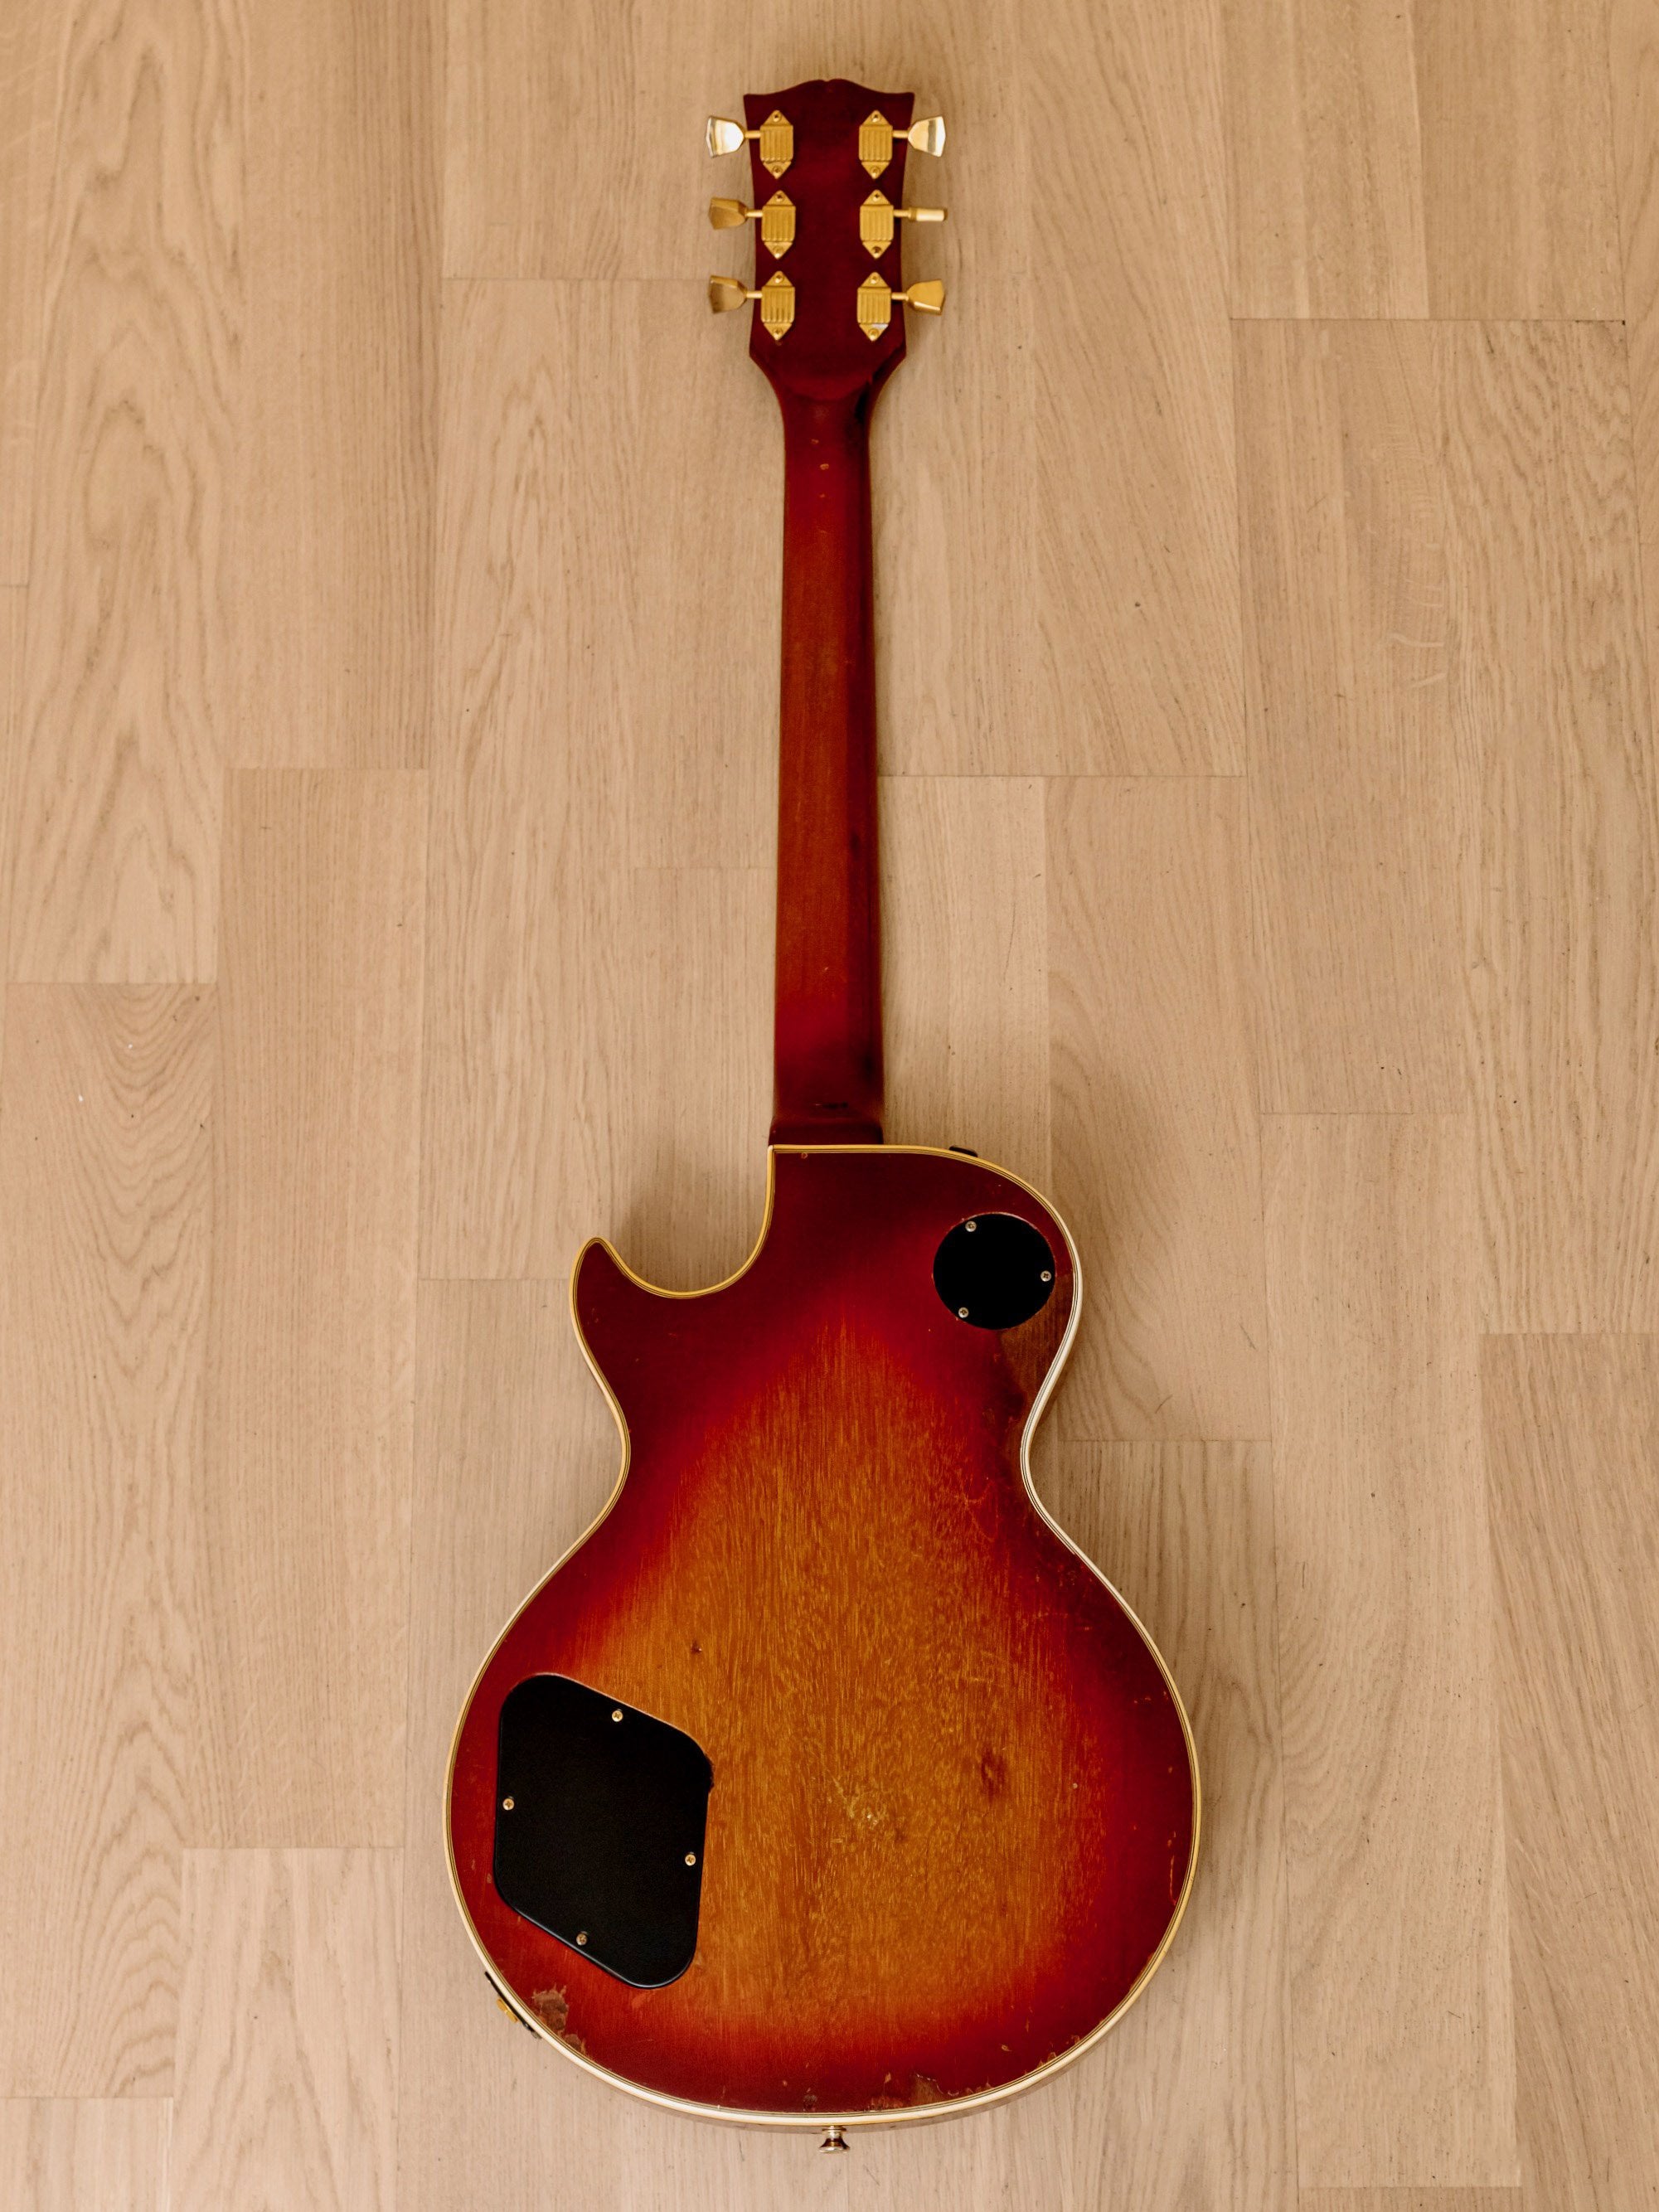 1971 Gibson Les Paul Custom Vintage Electric Guitar Cherry Sunburst w/ T Tops, Embossed Covers, Case